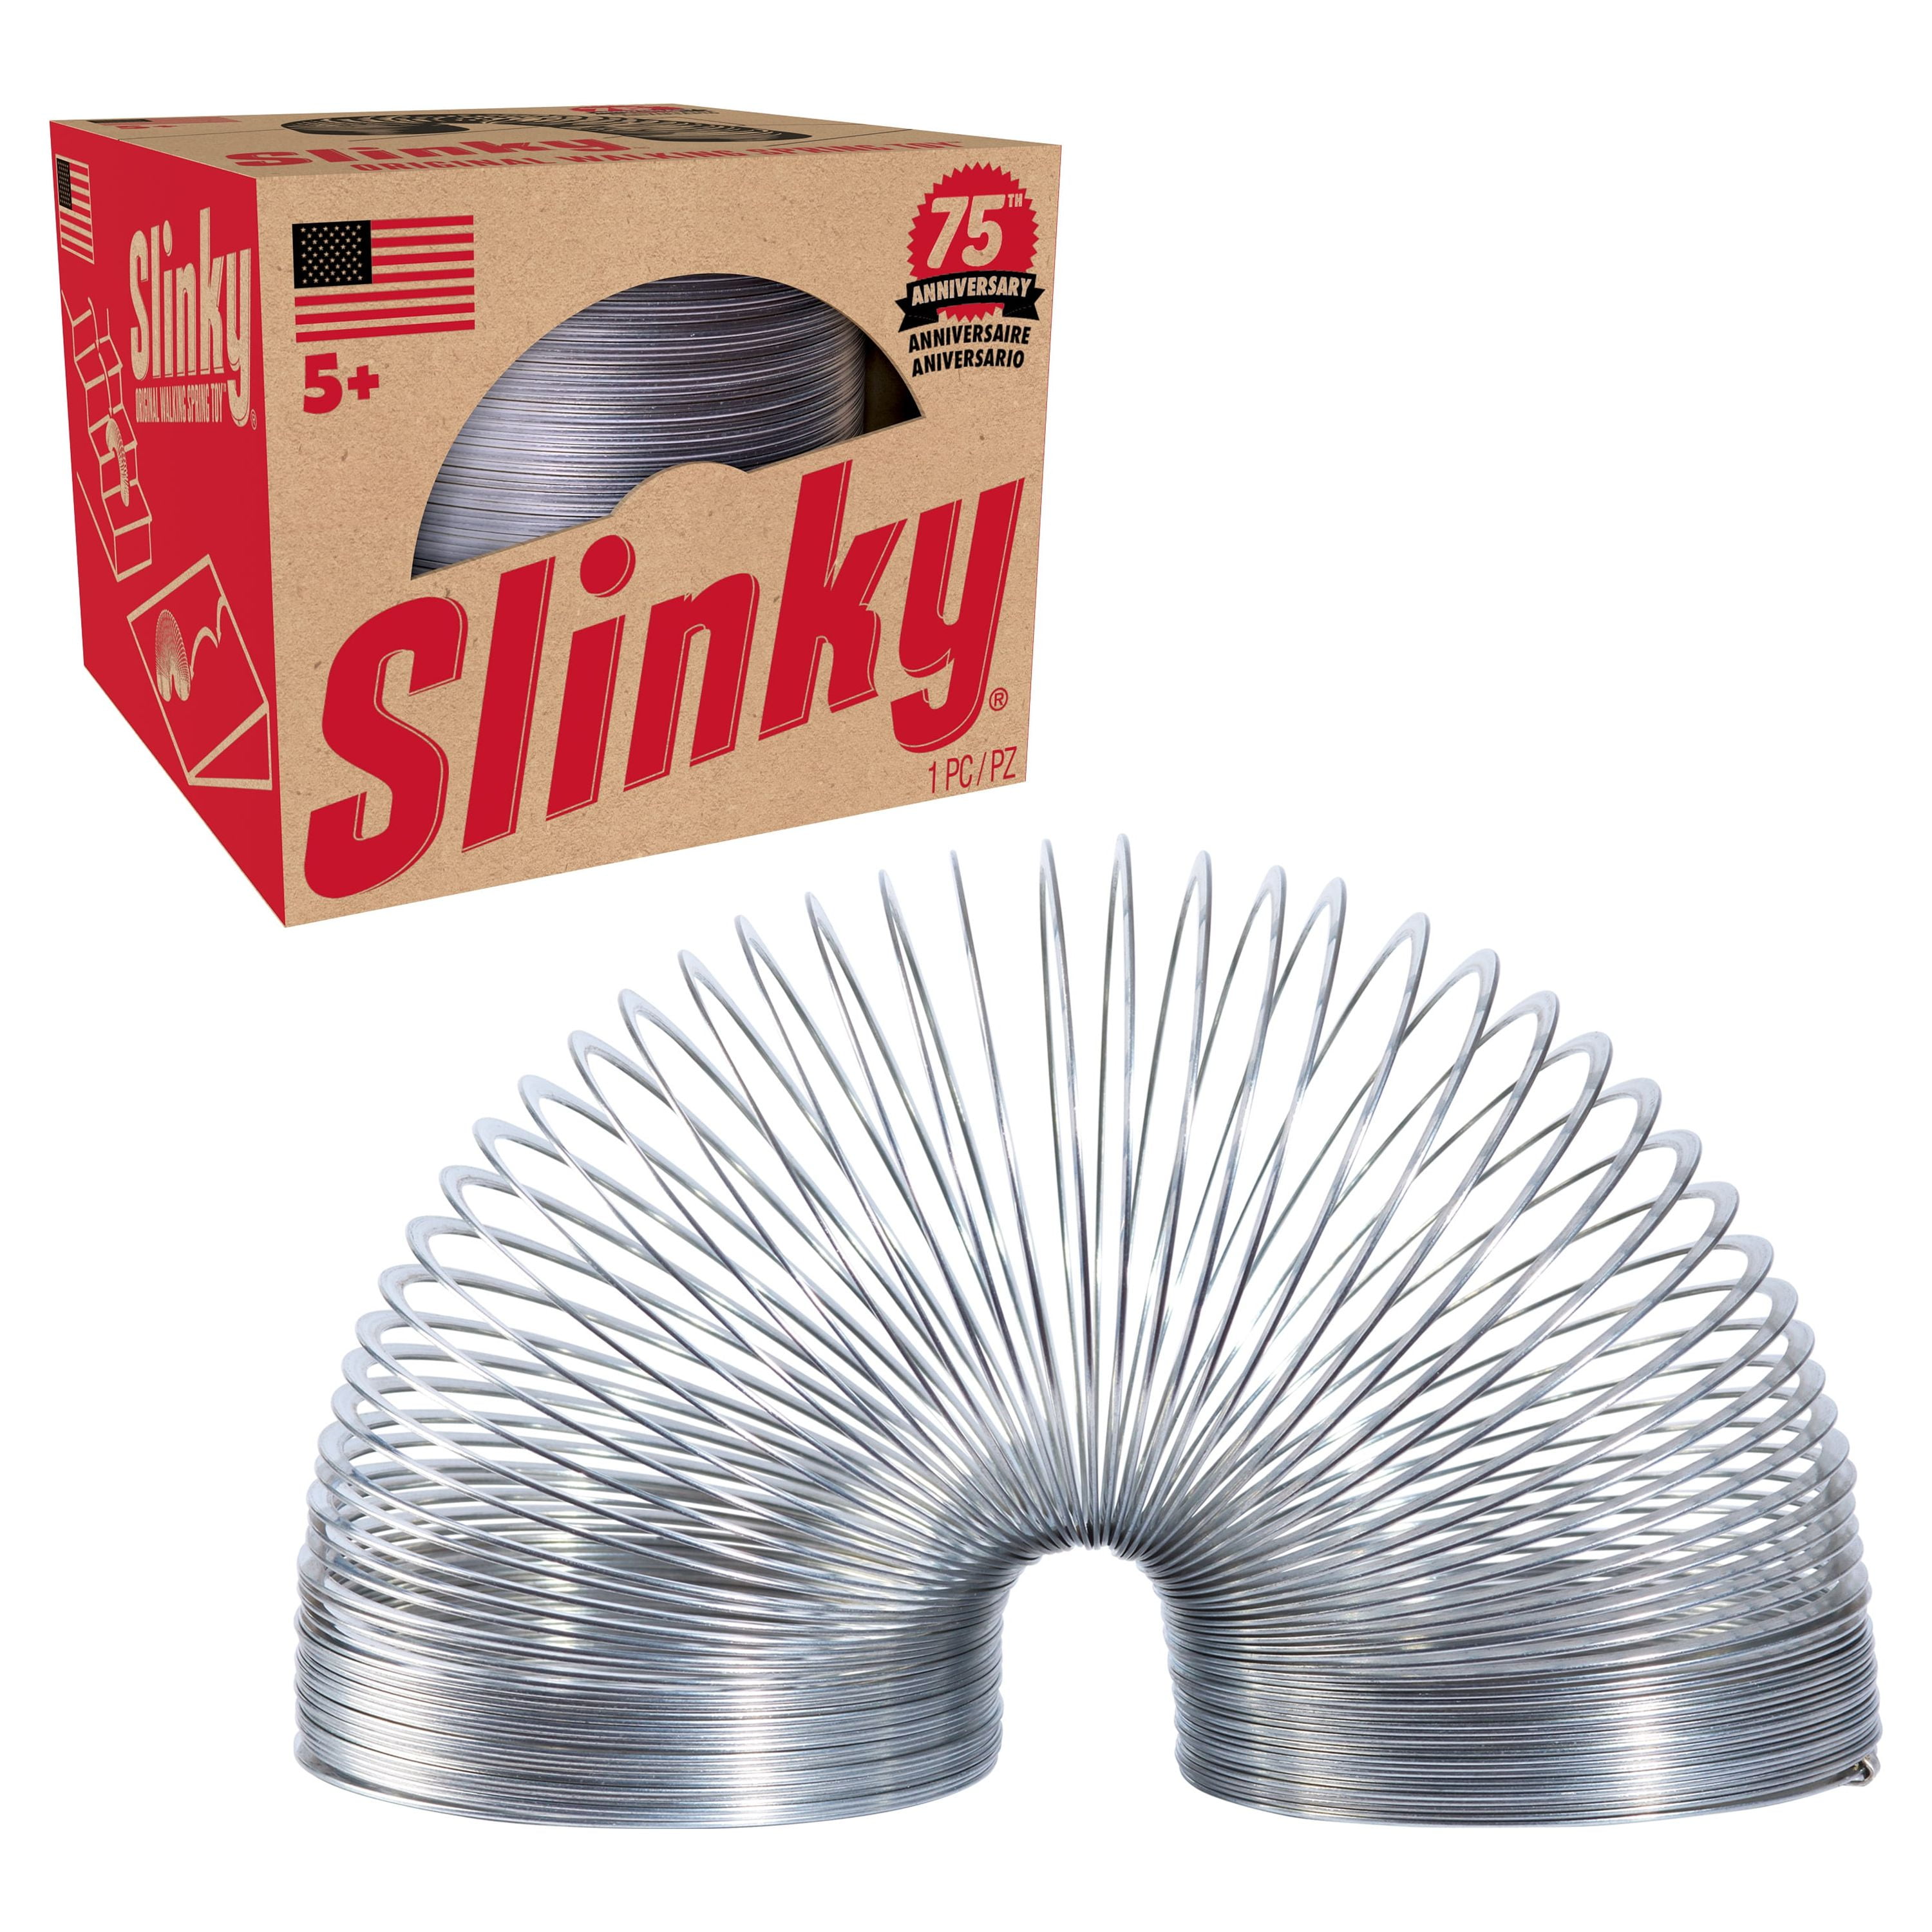 Retro Slinky the Original Walking Spring Toy, Silver Metal Slinky, Ages 5+ $5.54